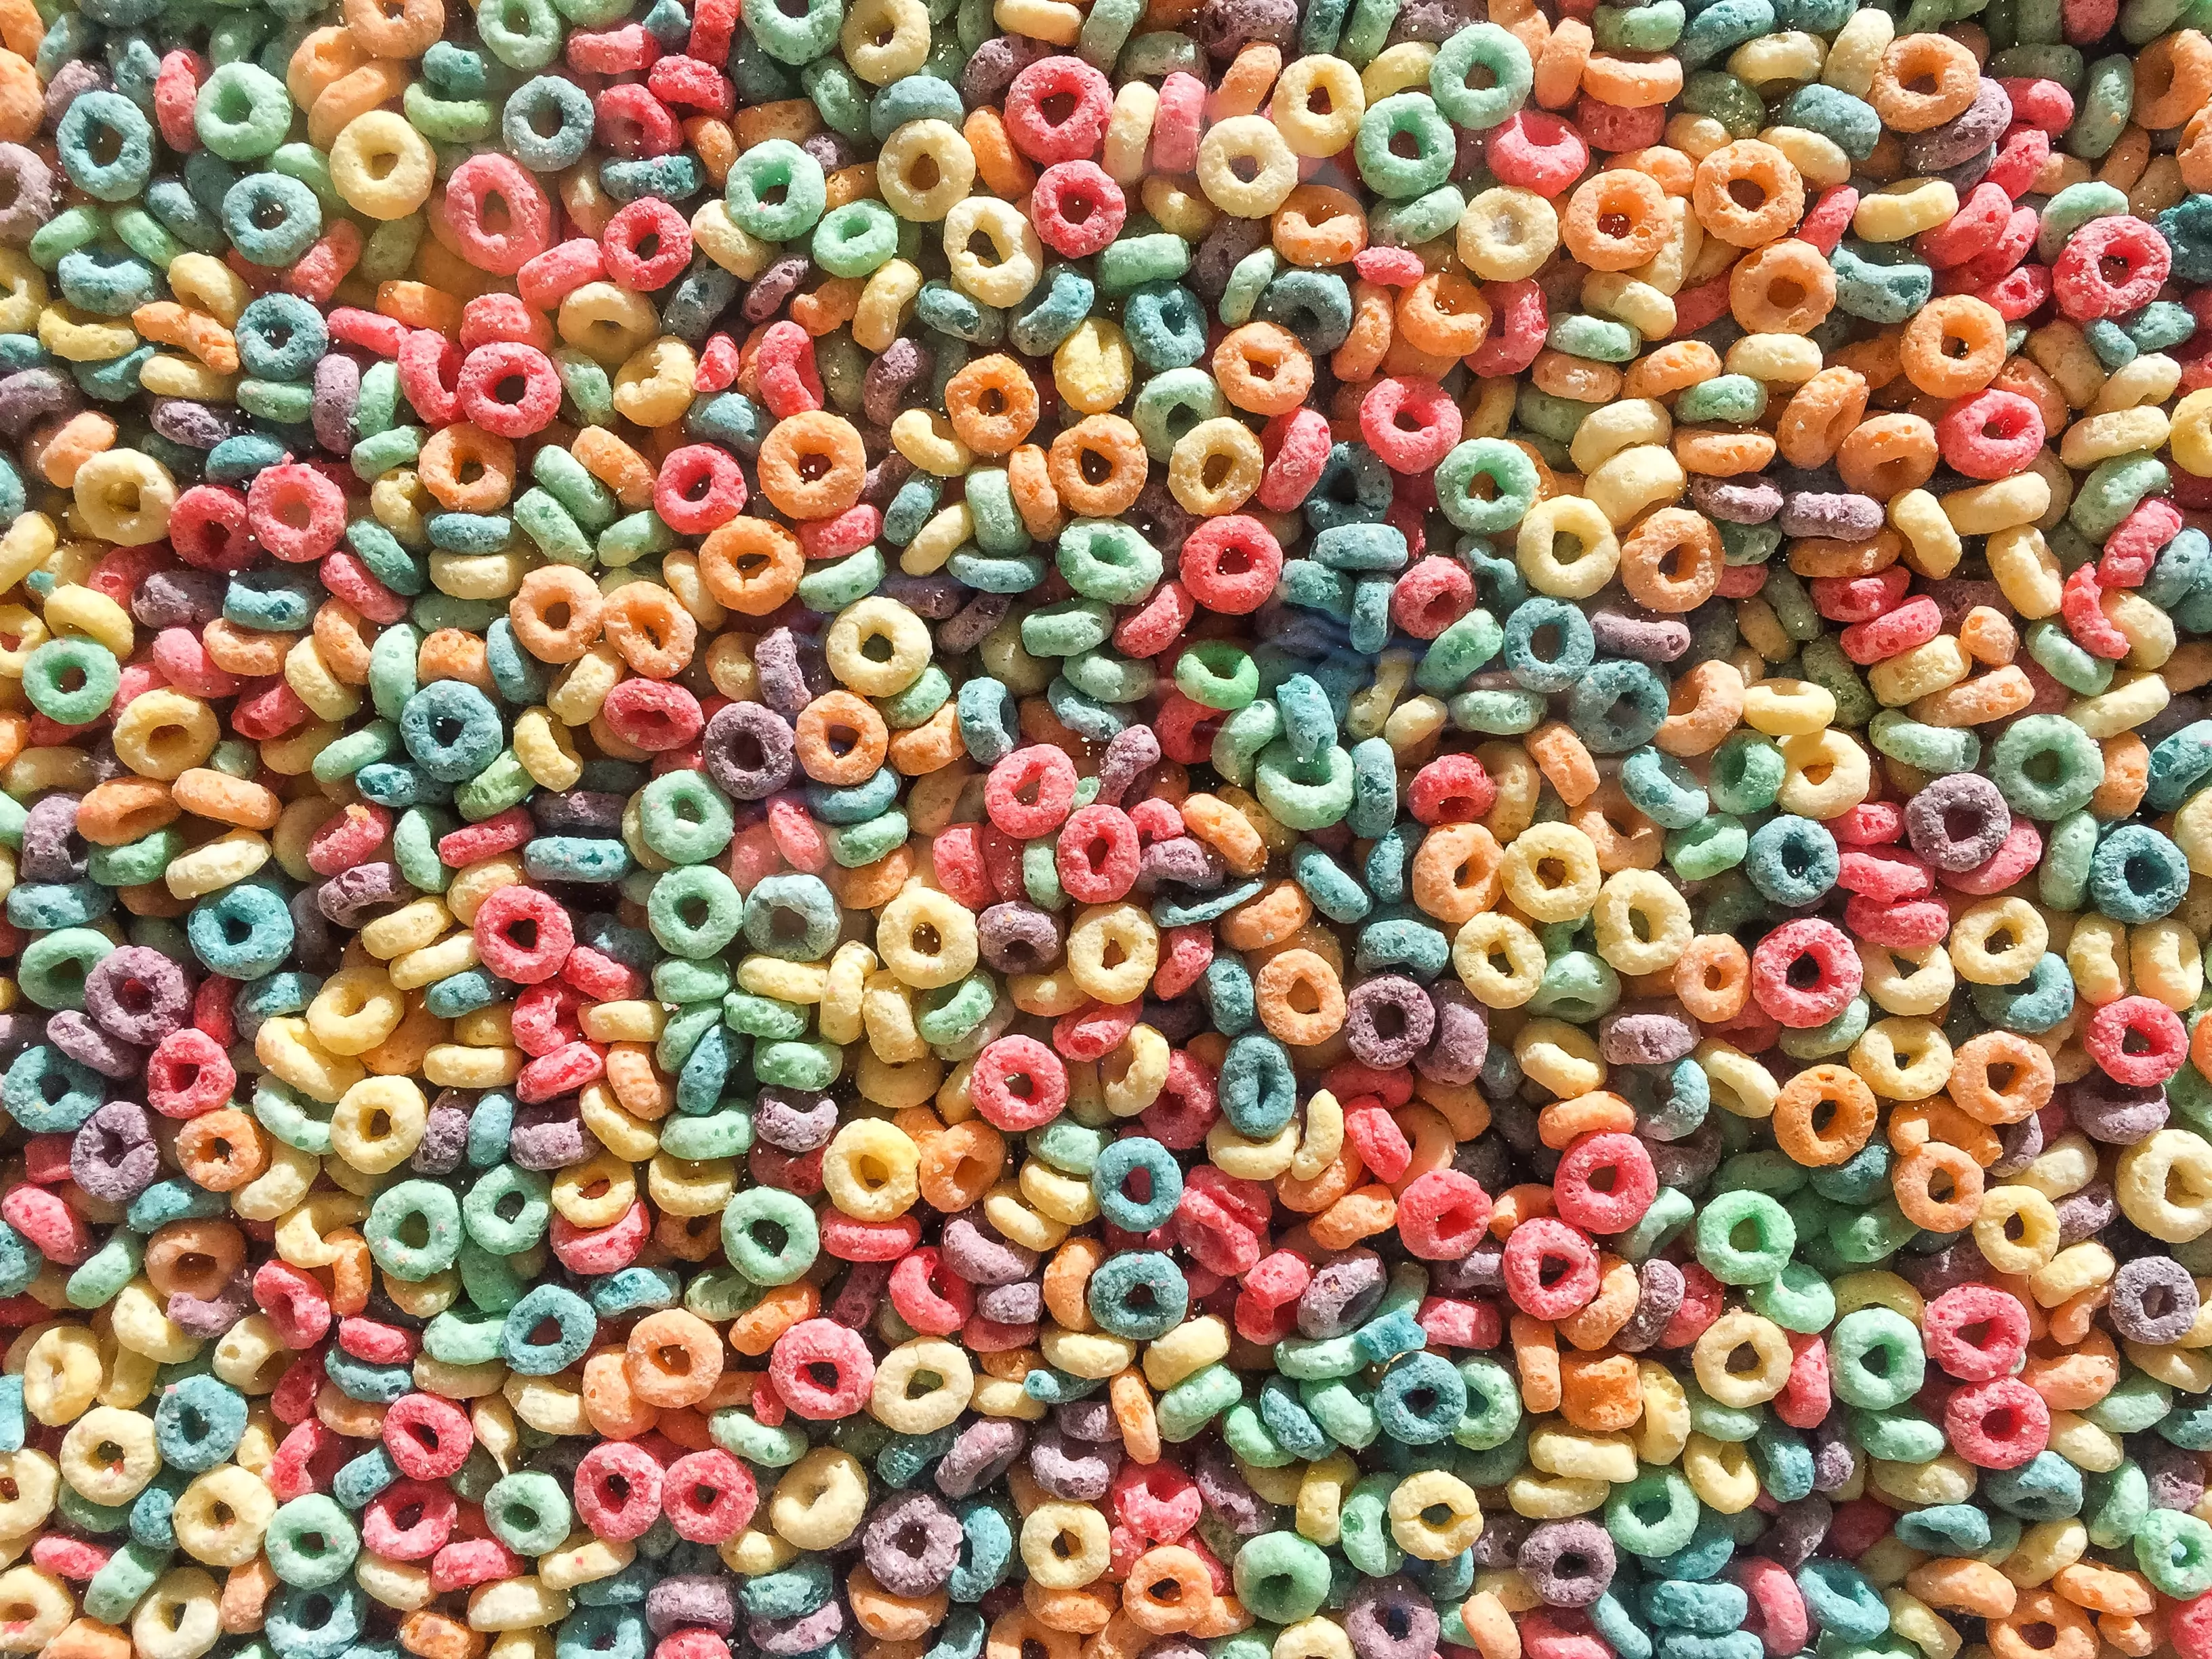 the breakfast cereal market